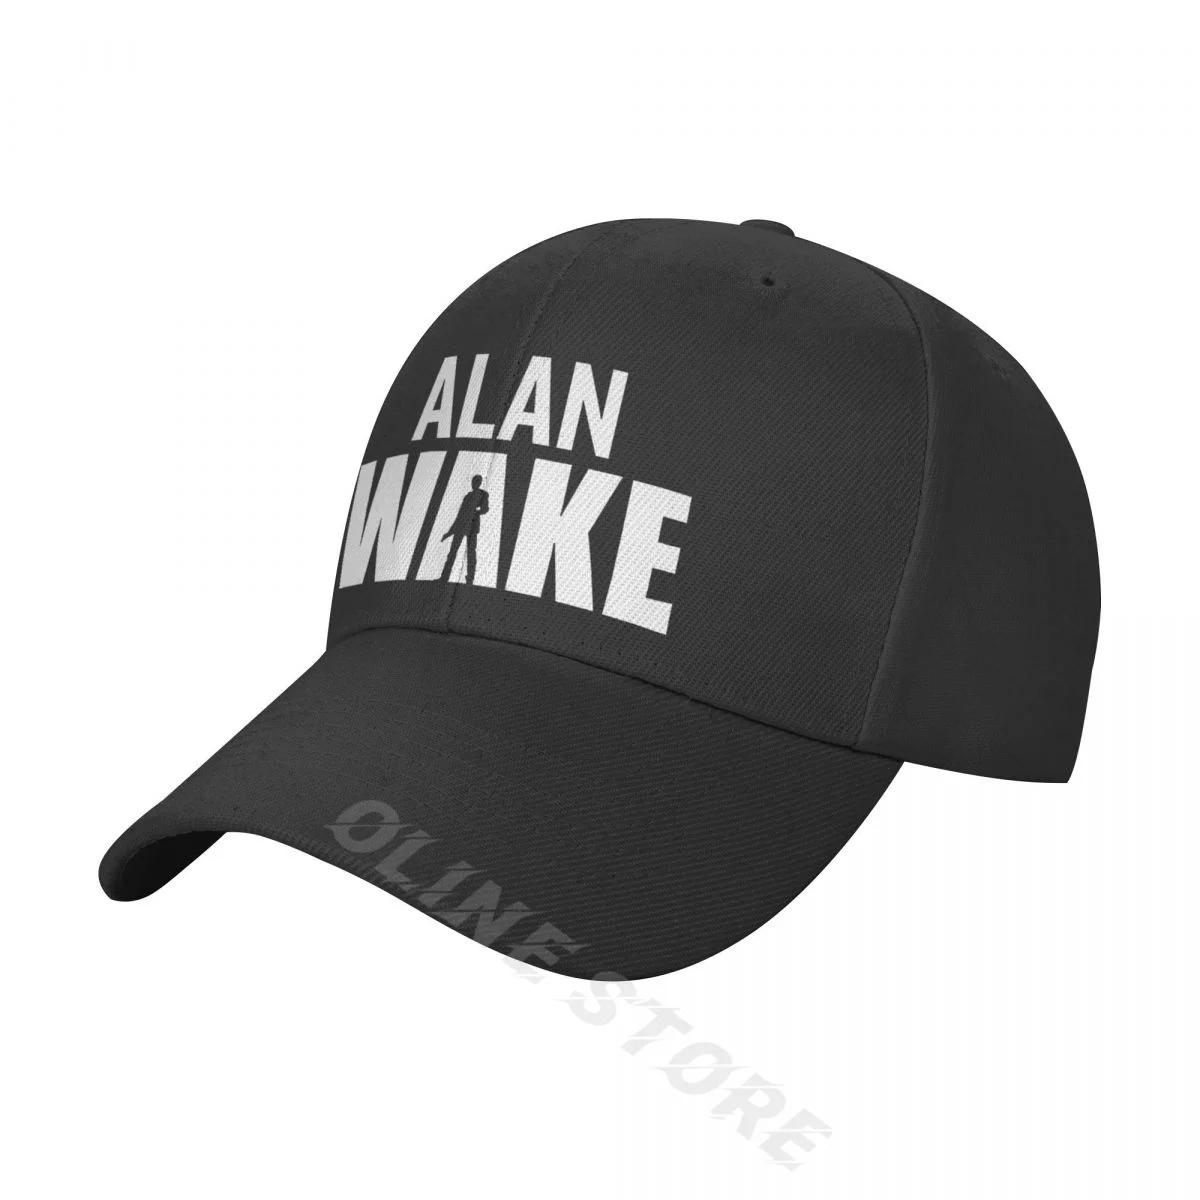 

ALAN WAKE Summer New 100% Cotton Baseball Cap High Quality Trends Cool Summer Sun Caps Adjustable Hip Hop Hat Snapback